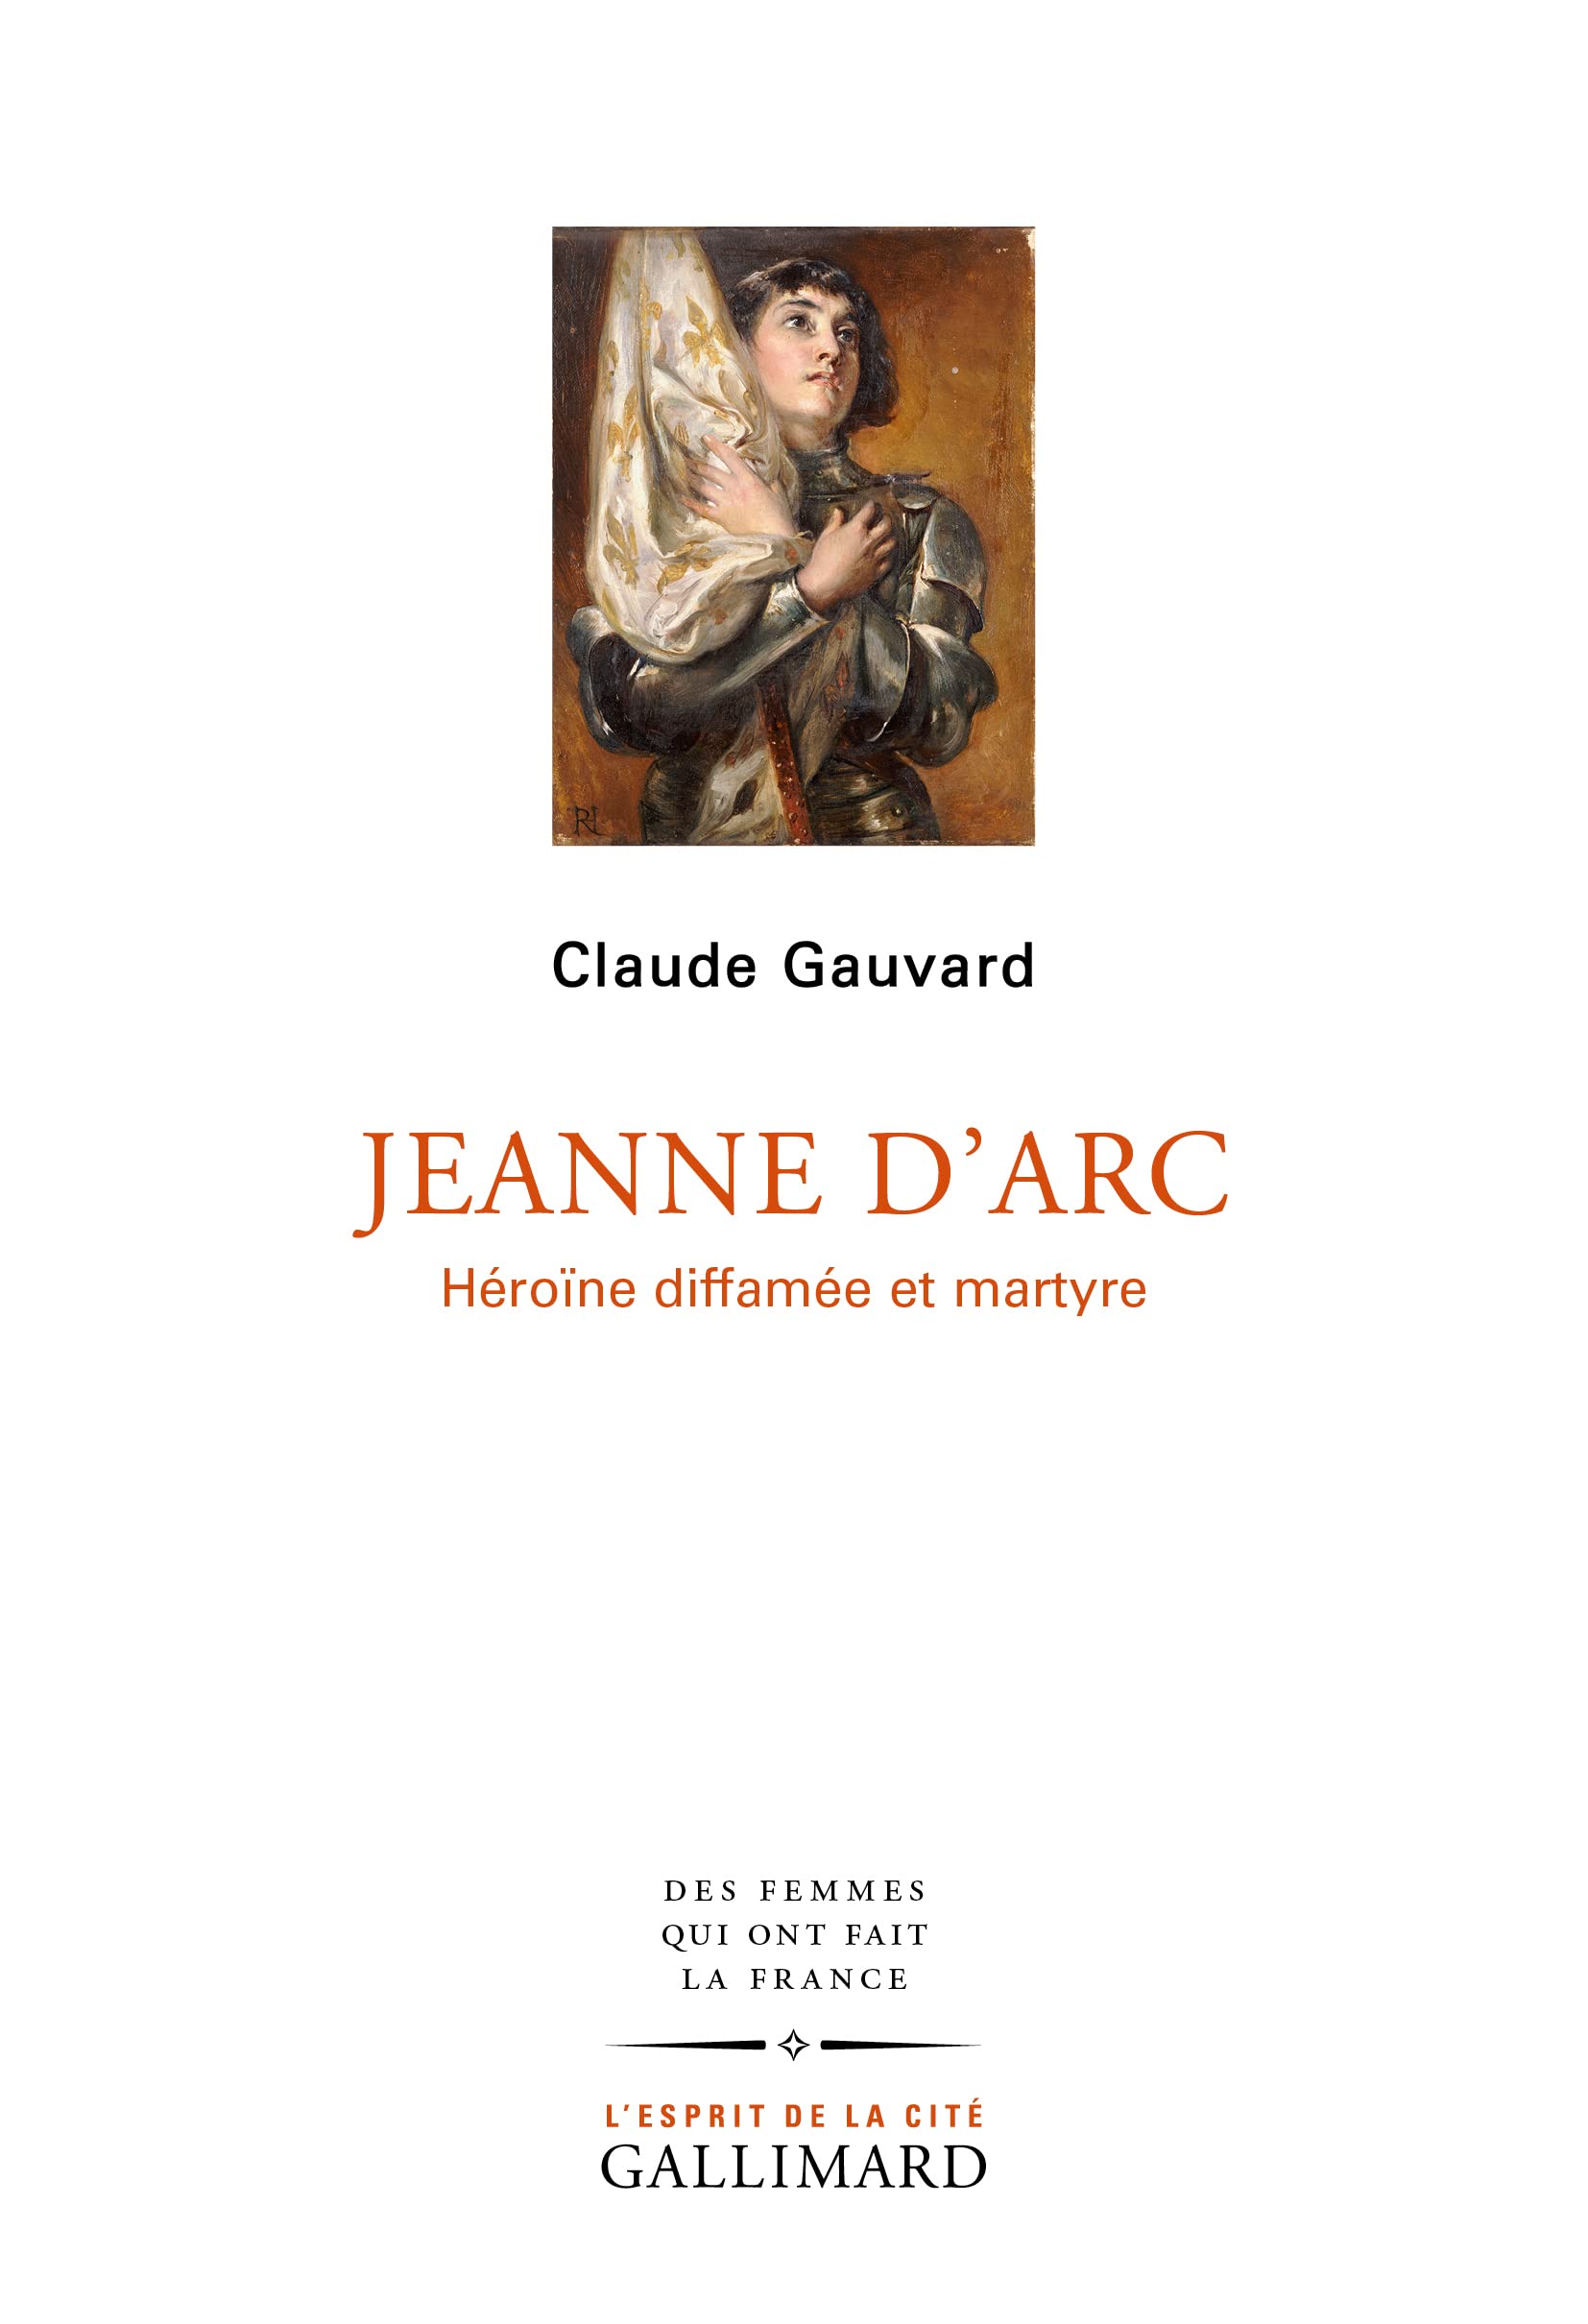 Jeanne d’Arc. Héroïne diffamée et martyre, de Claude Gauvard